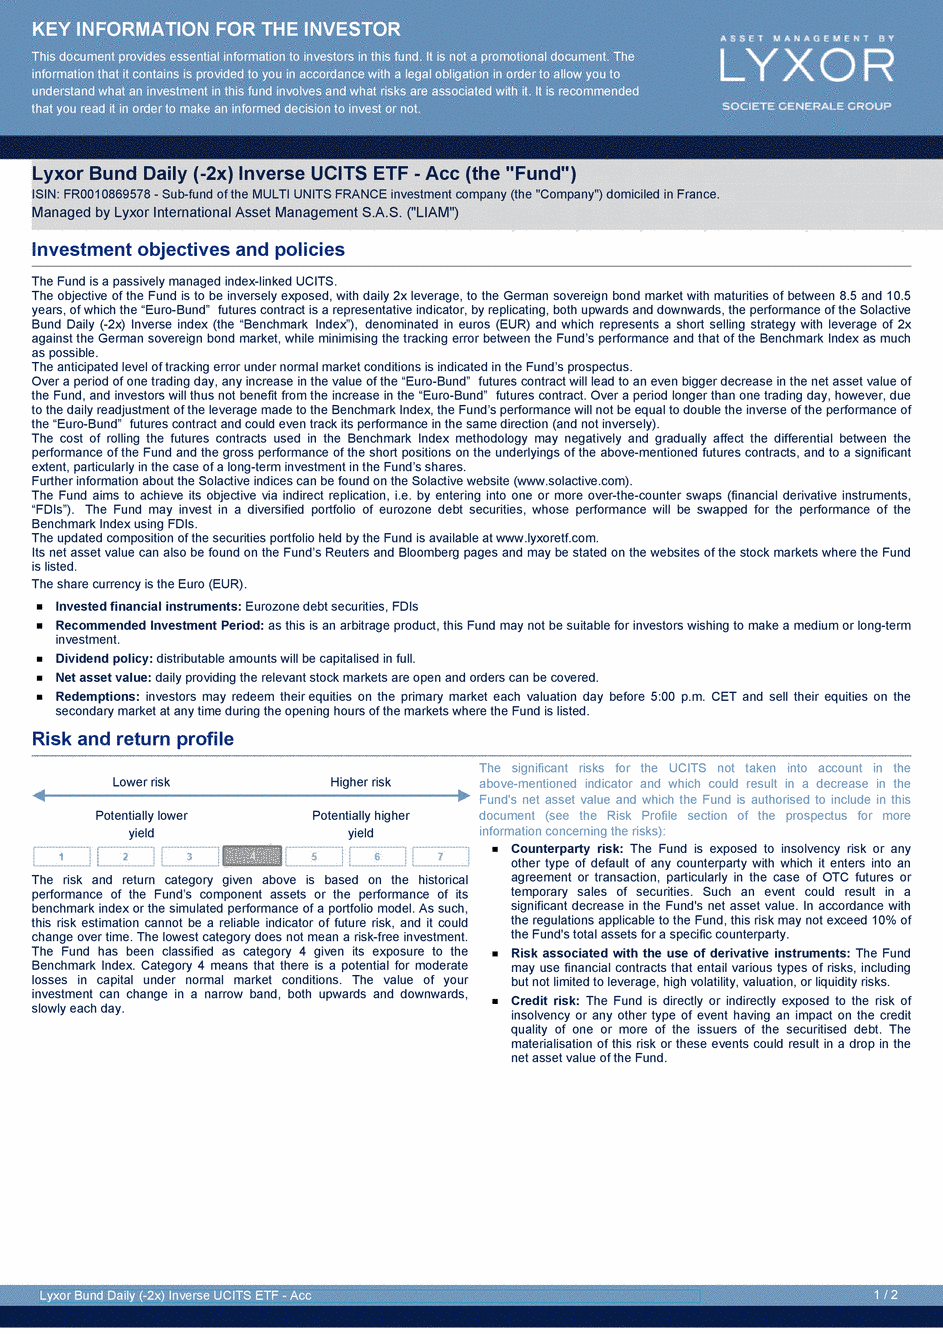 DICI Lyxor Bund Daily (-2x) Inverse UCITS ETF - Acc - 19/02/2021 - Anglais